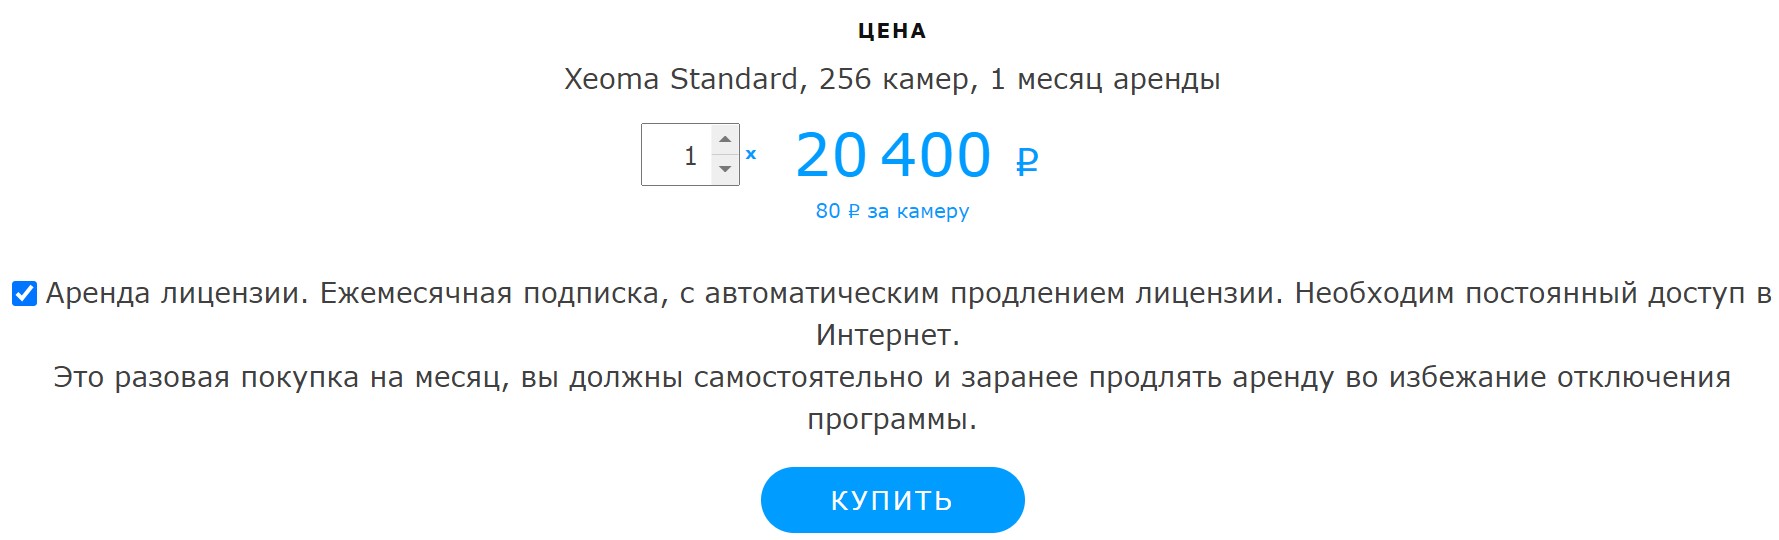 rent-license-xeoma-standard-256